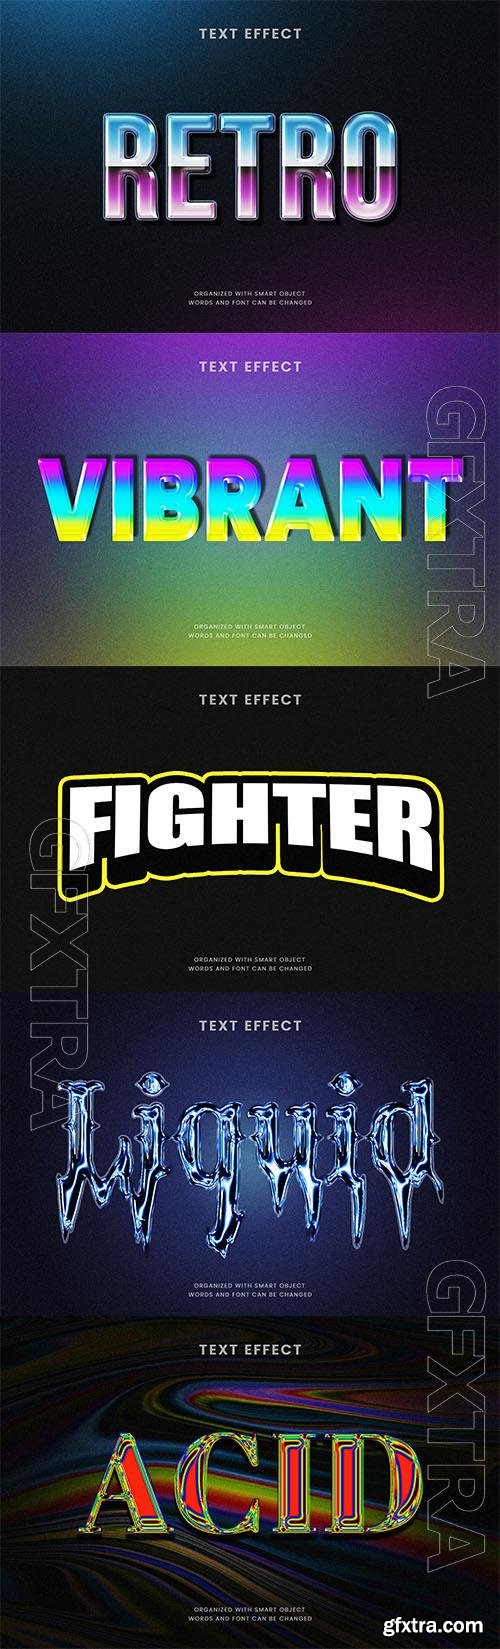 Psd style text effect editable set vol 9